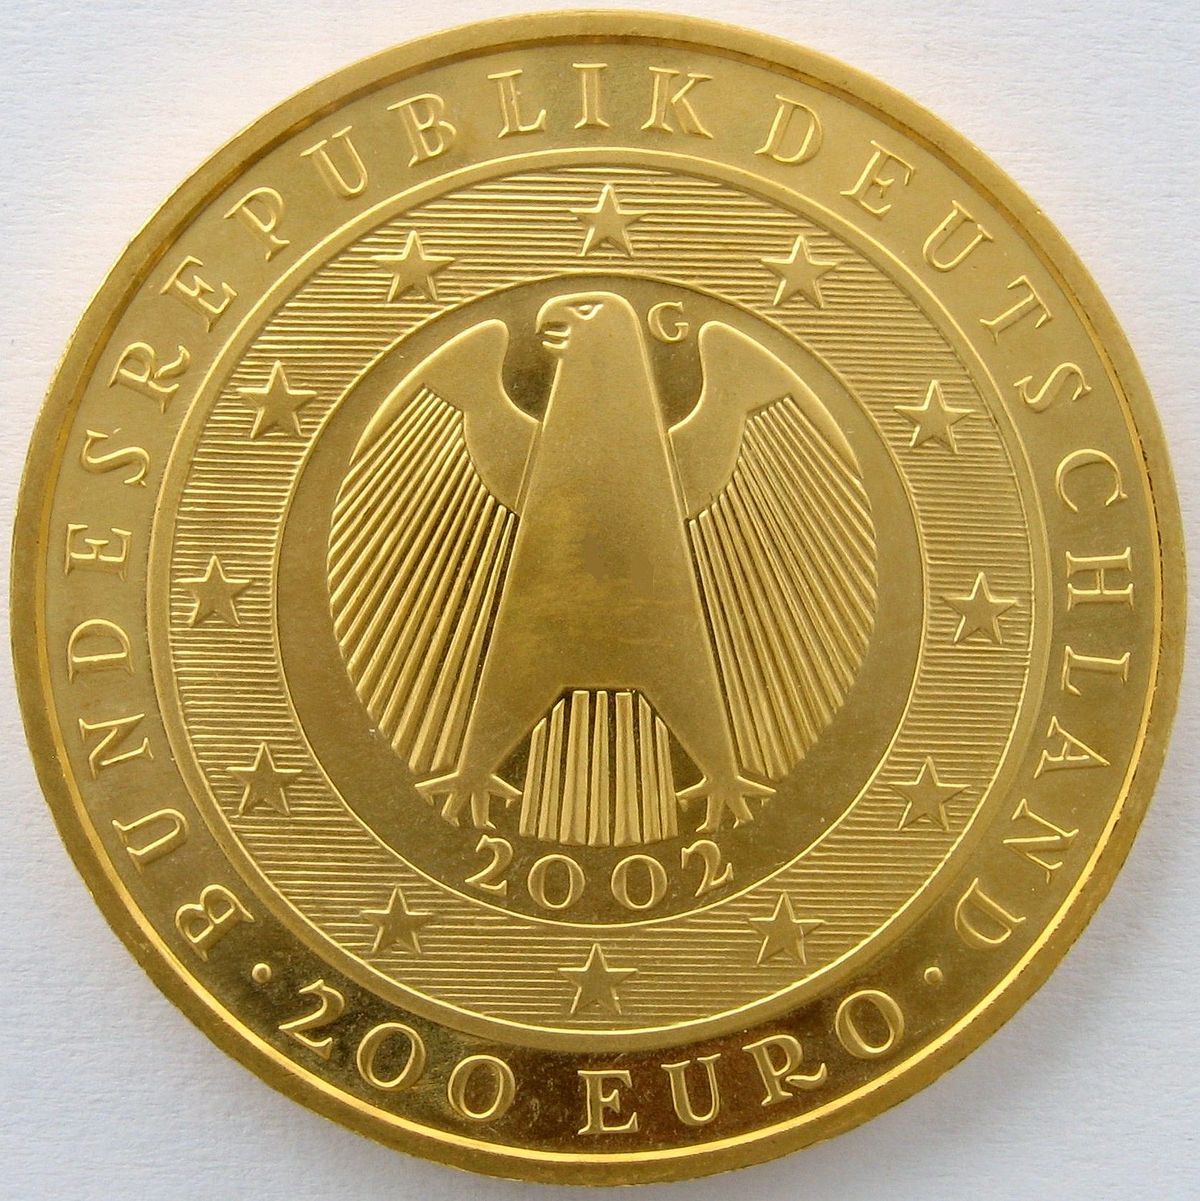 200€ Goldmünze